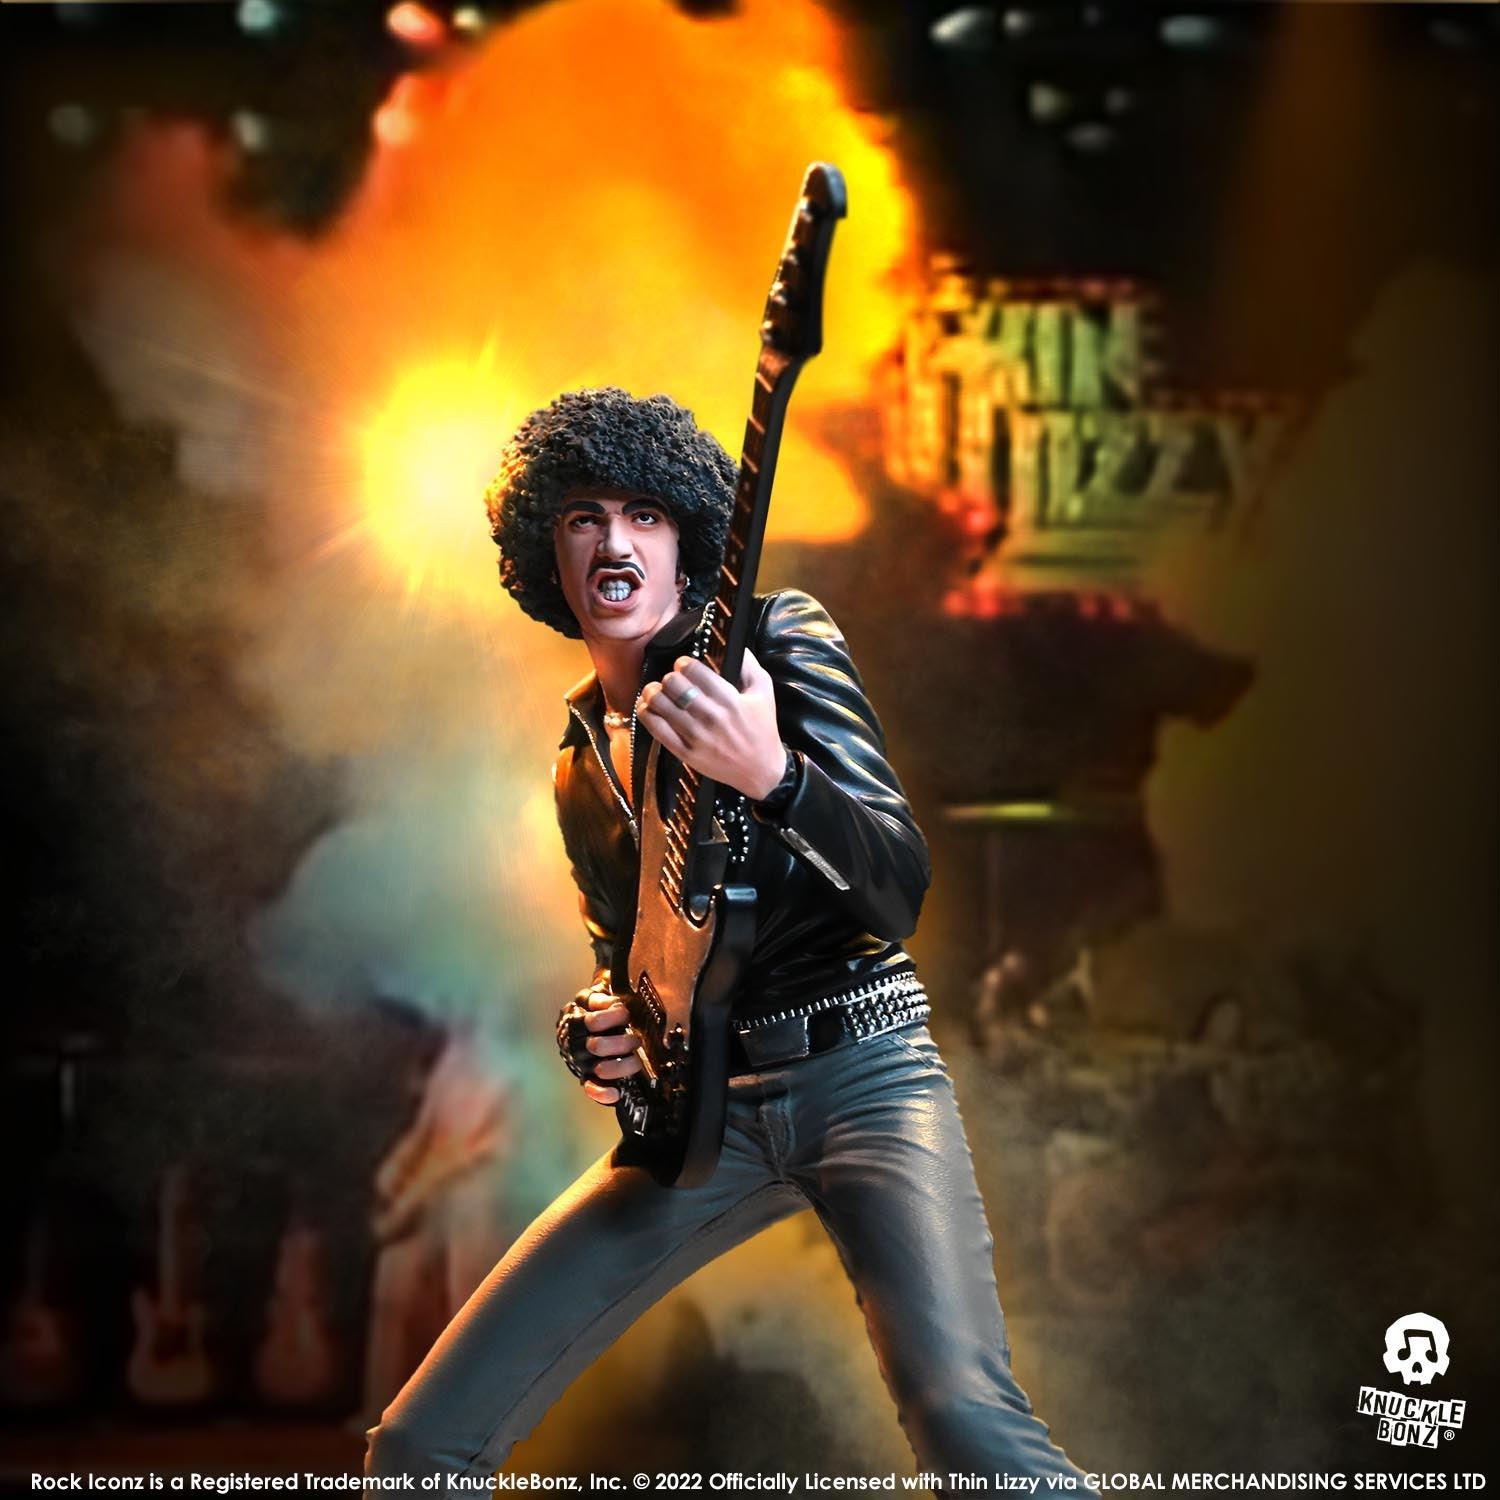 KNUTHINLIZZY100 Thin Lizzy - Phil Lynott Rock Iconz Statue - KnuckleBonz - Titan Pop Culture